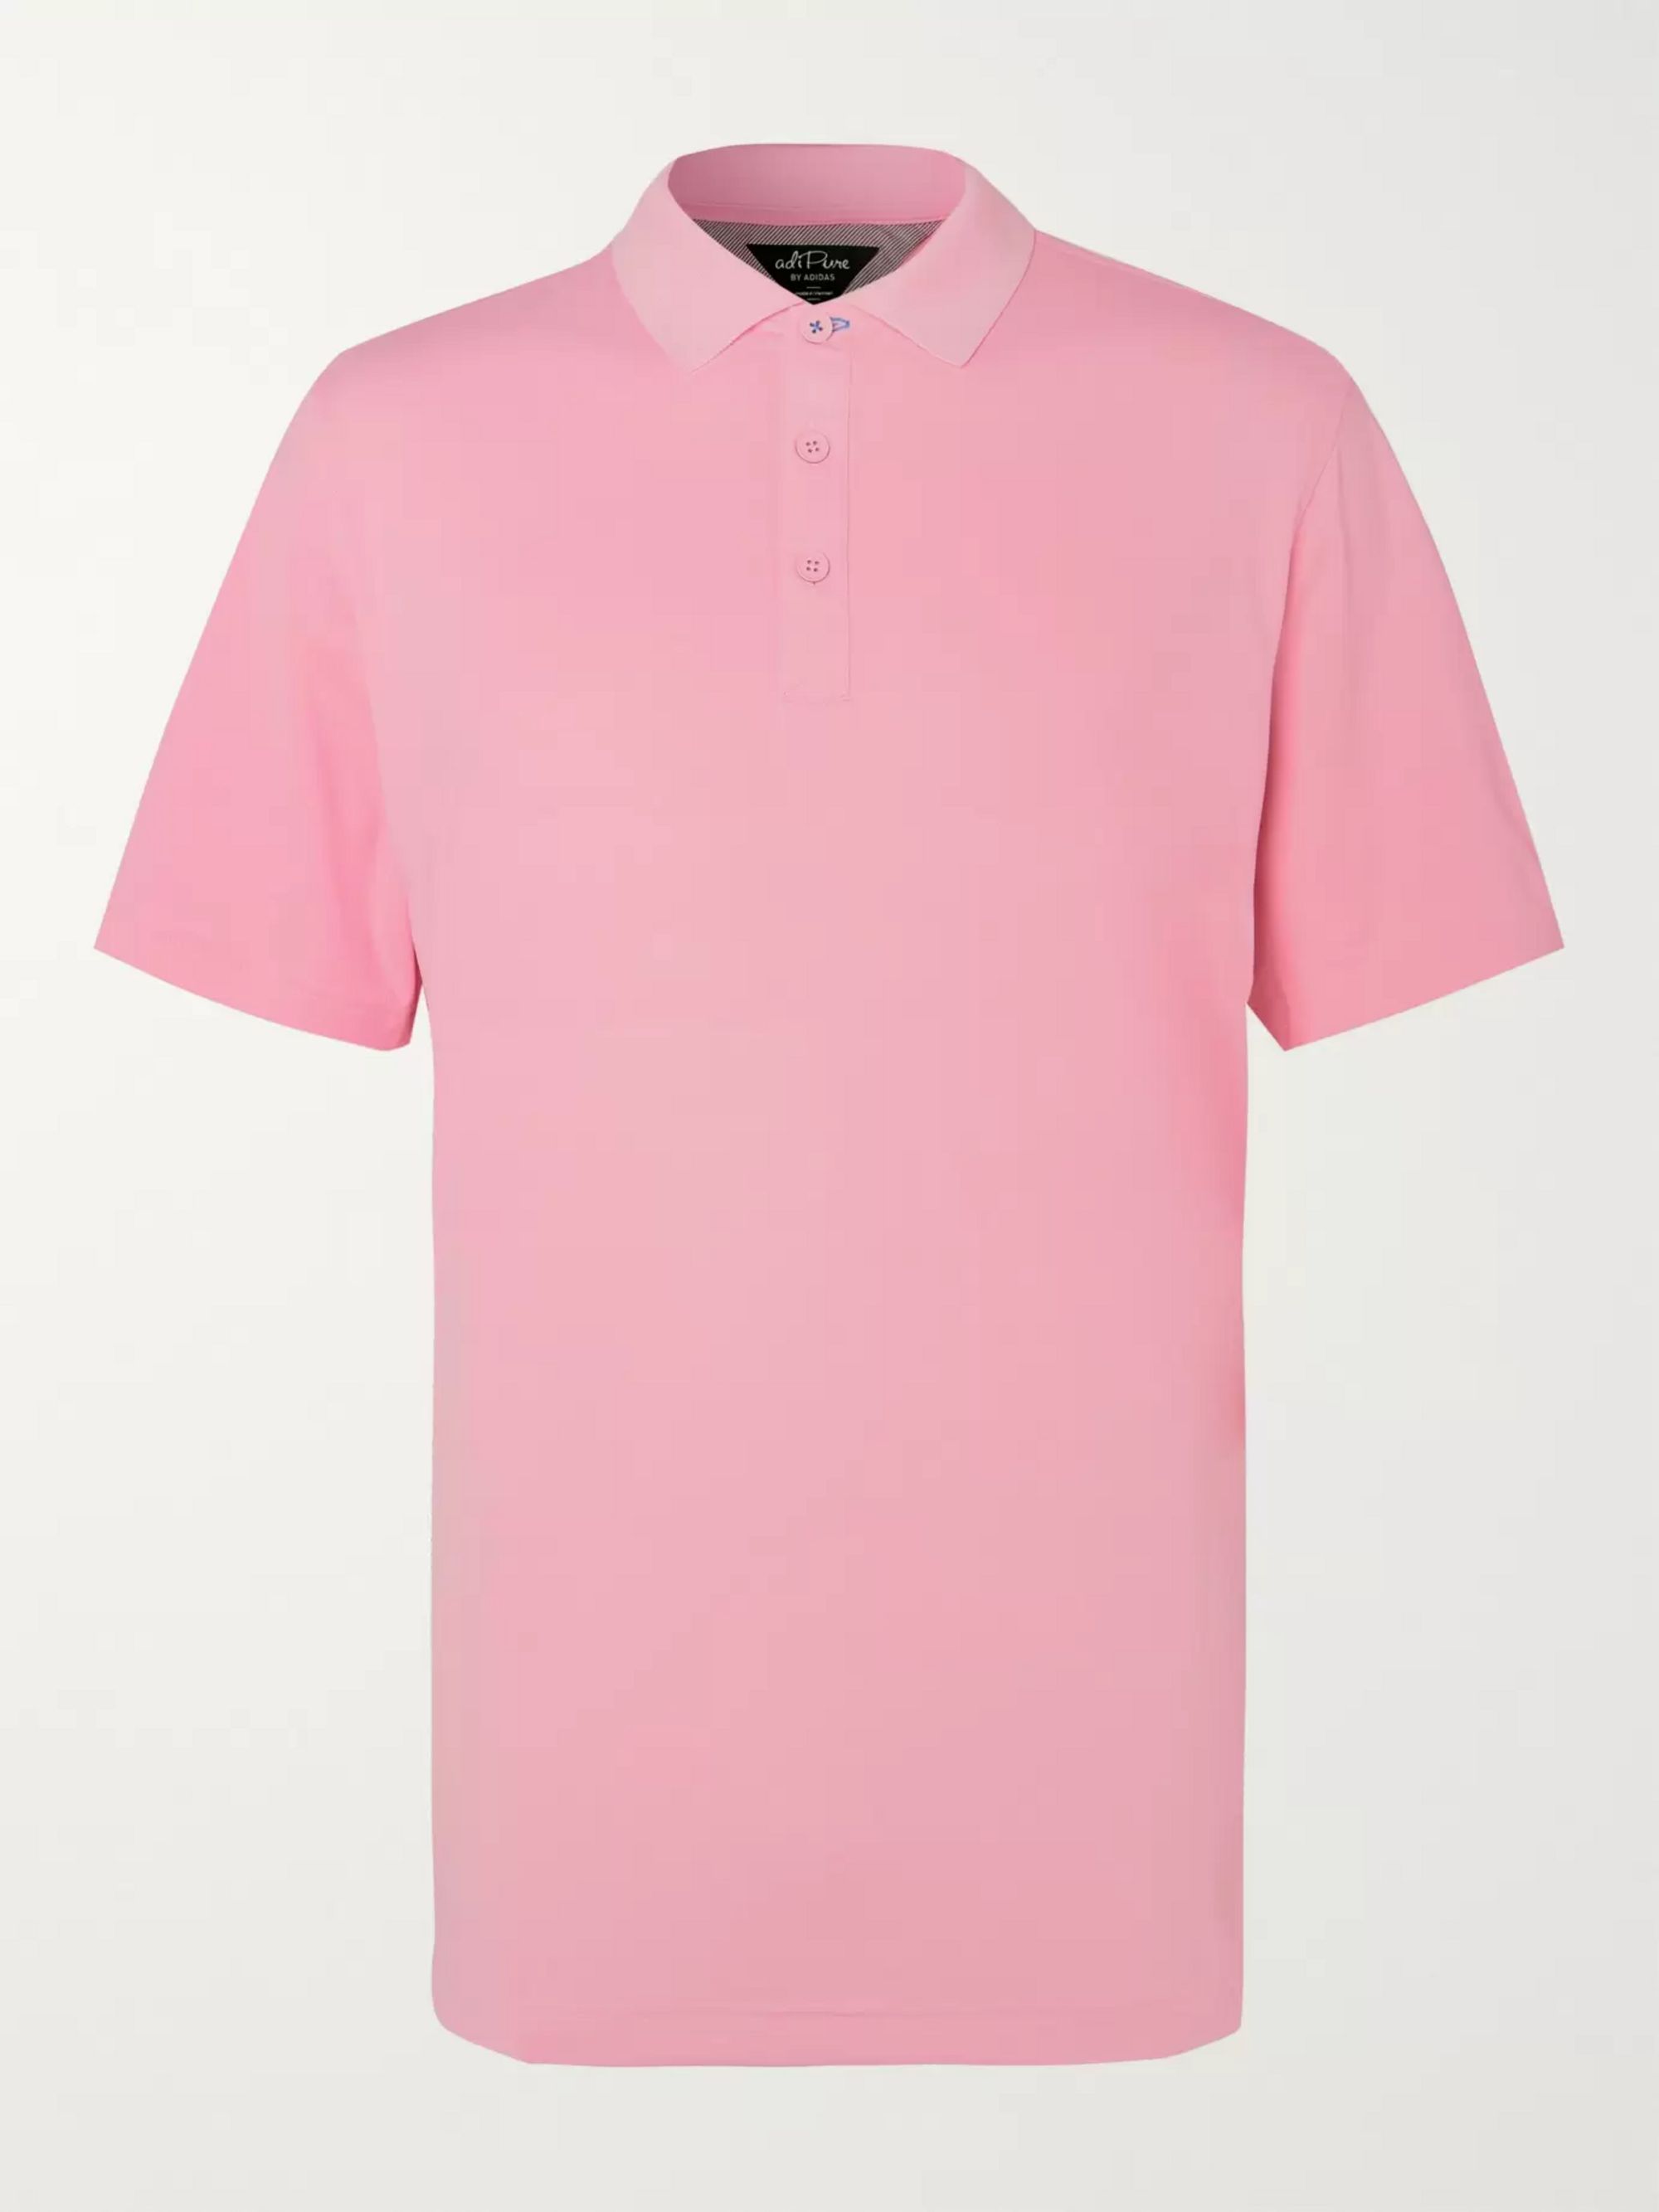 adipure golf shirts